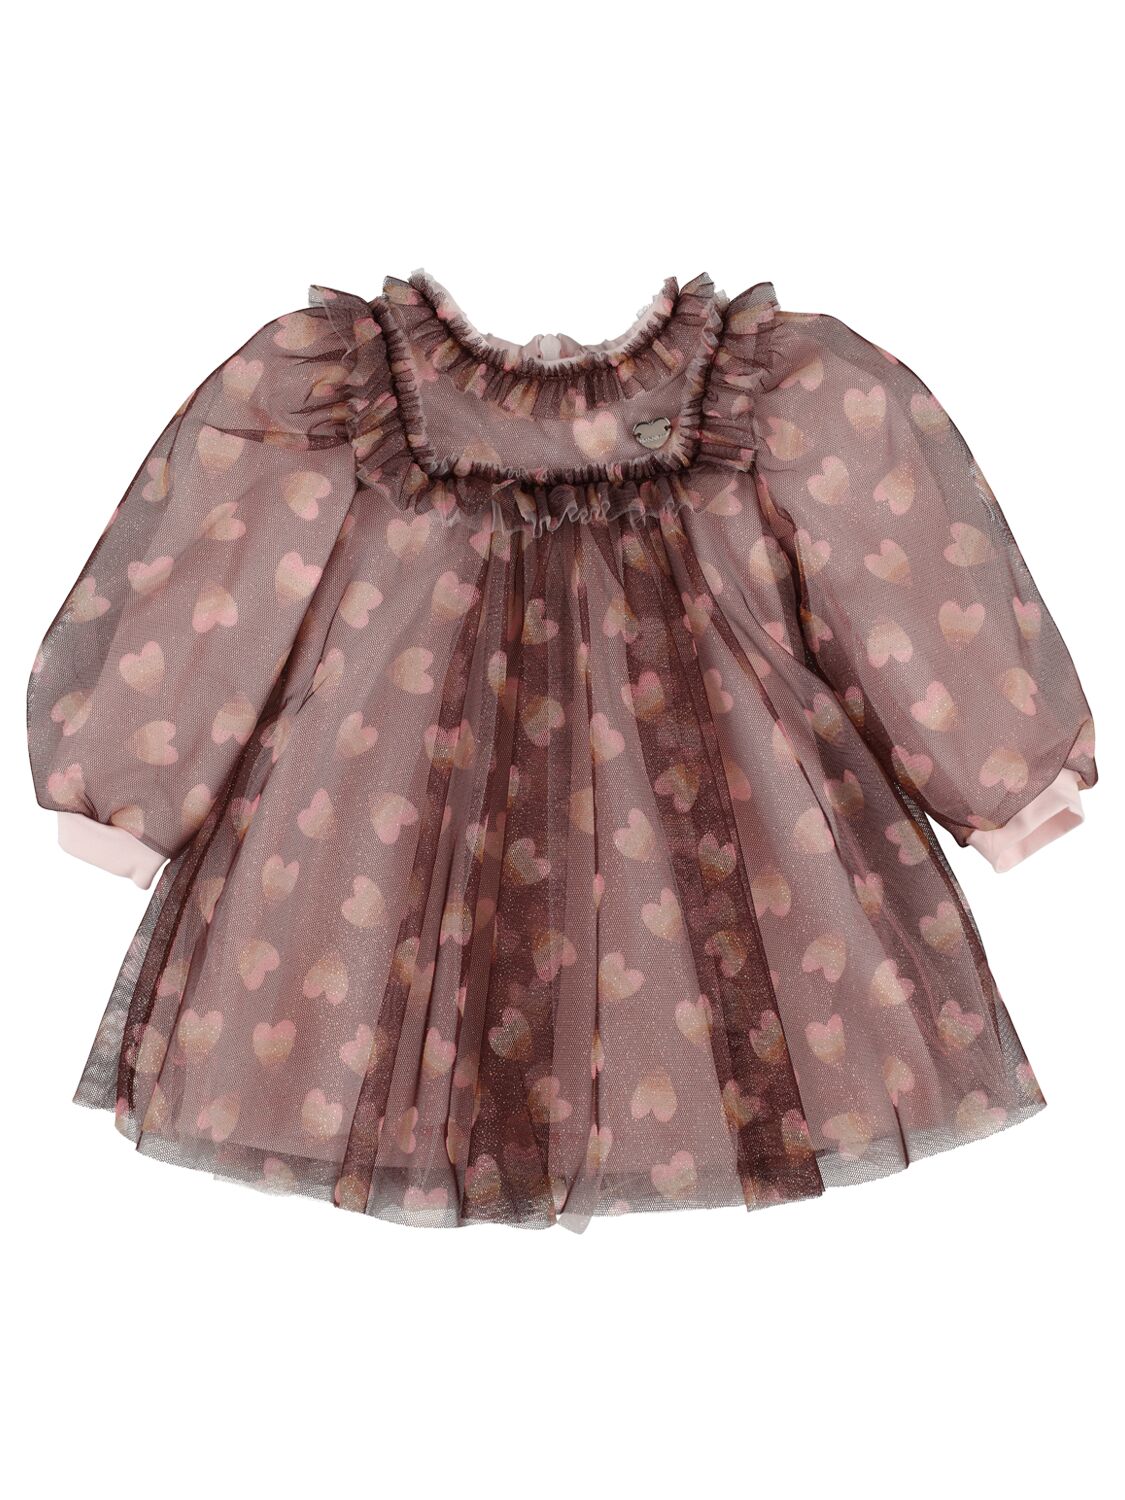 Monnalisa Kids' Heart Printed Glittered Tulle Dress In Brown